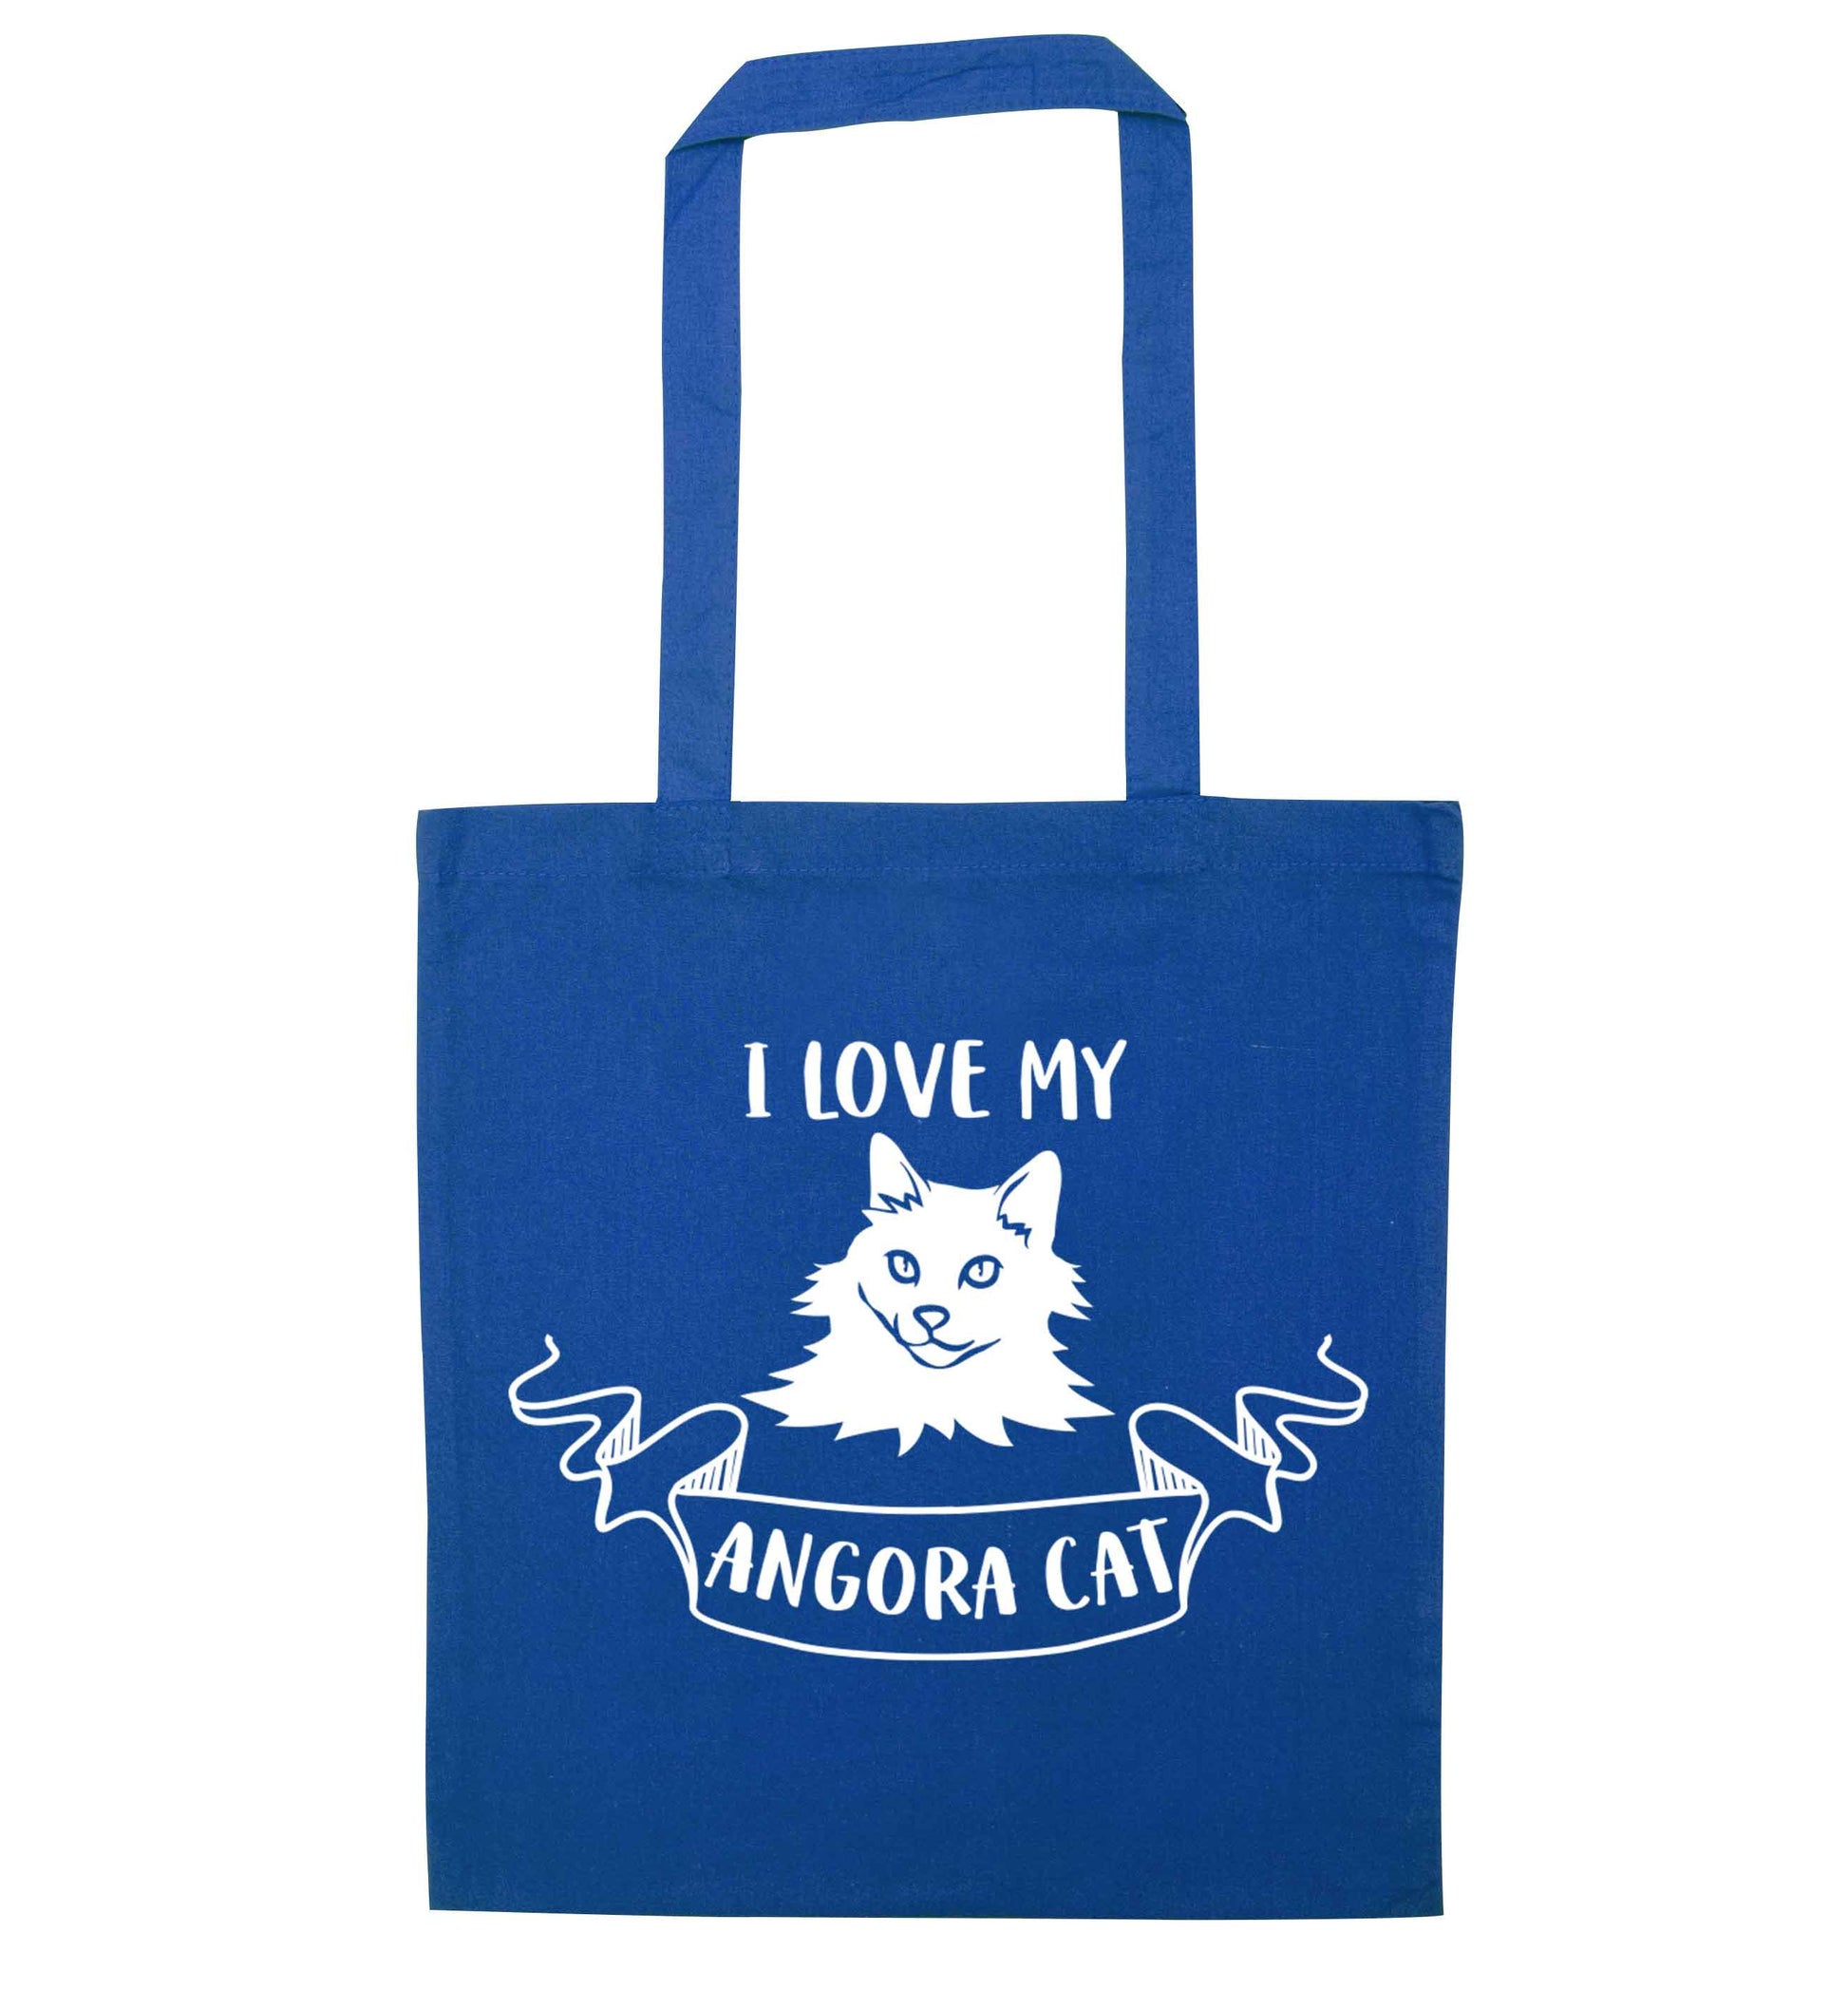 I love my angora cat blue tote bag